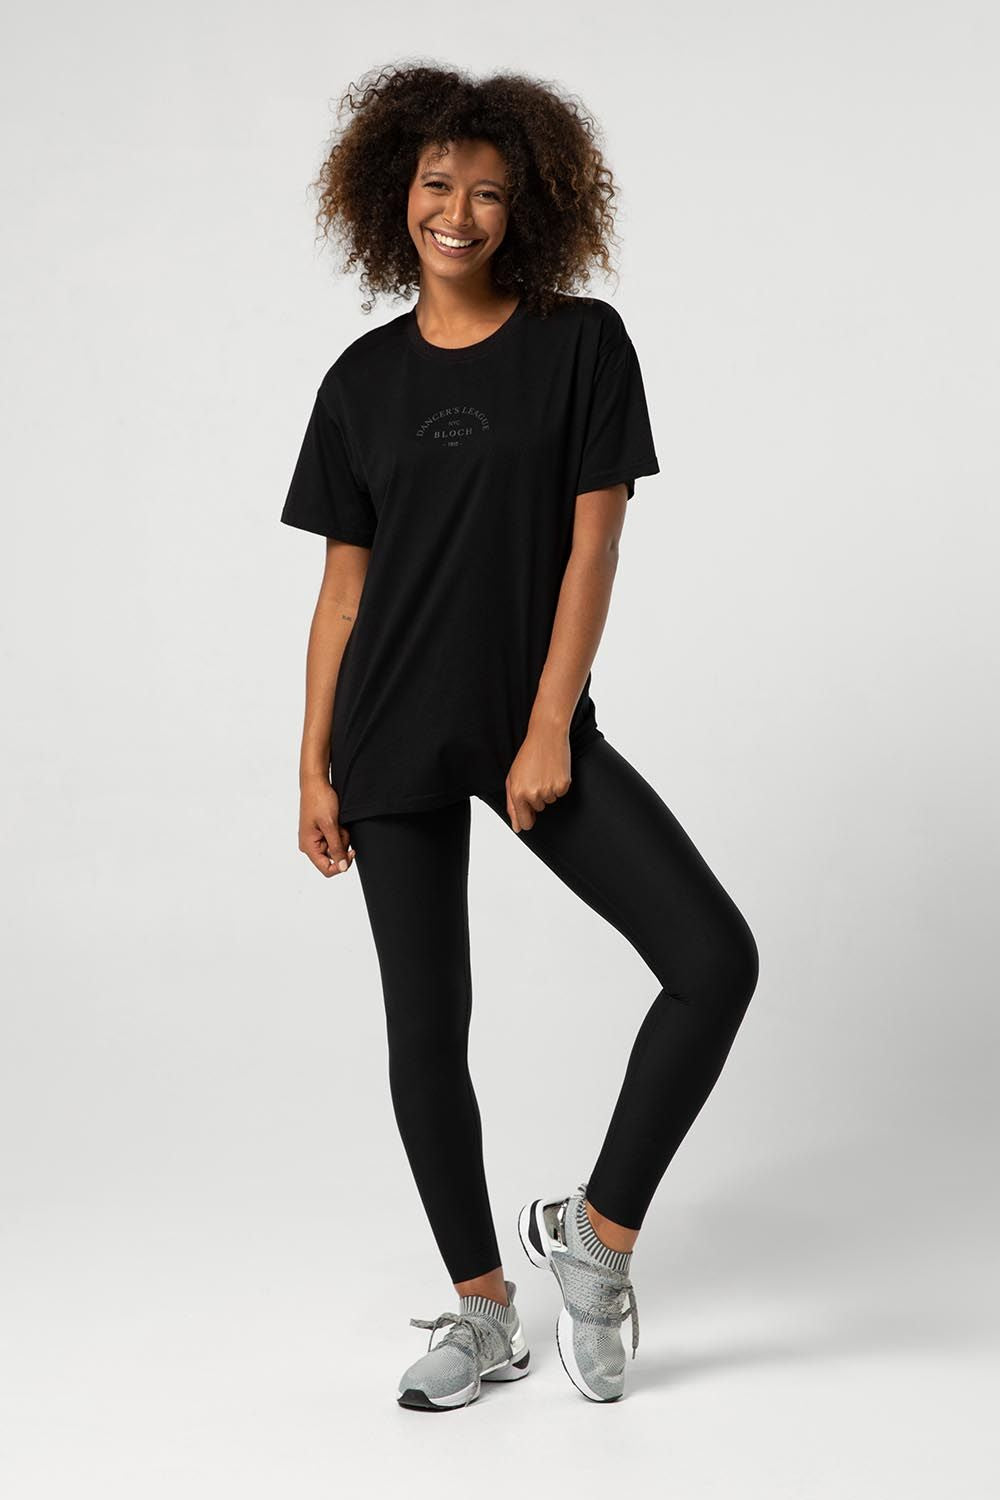 Women's Black Print Sweatshirt, Black Leggings, Black Athletic Shoes